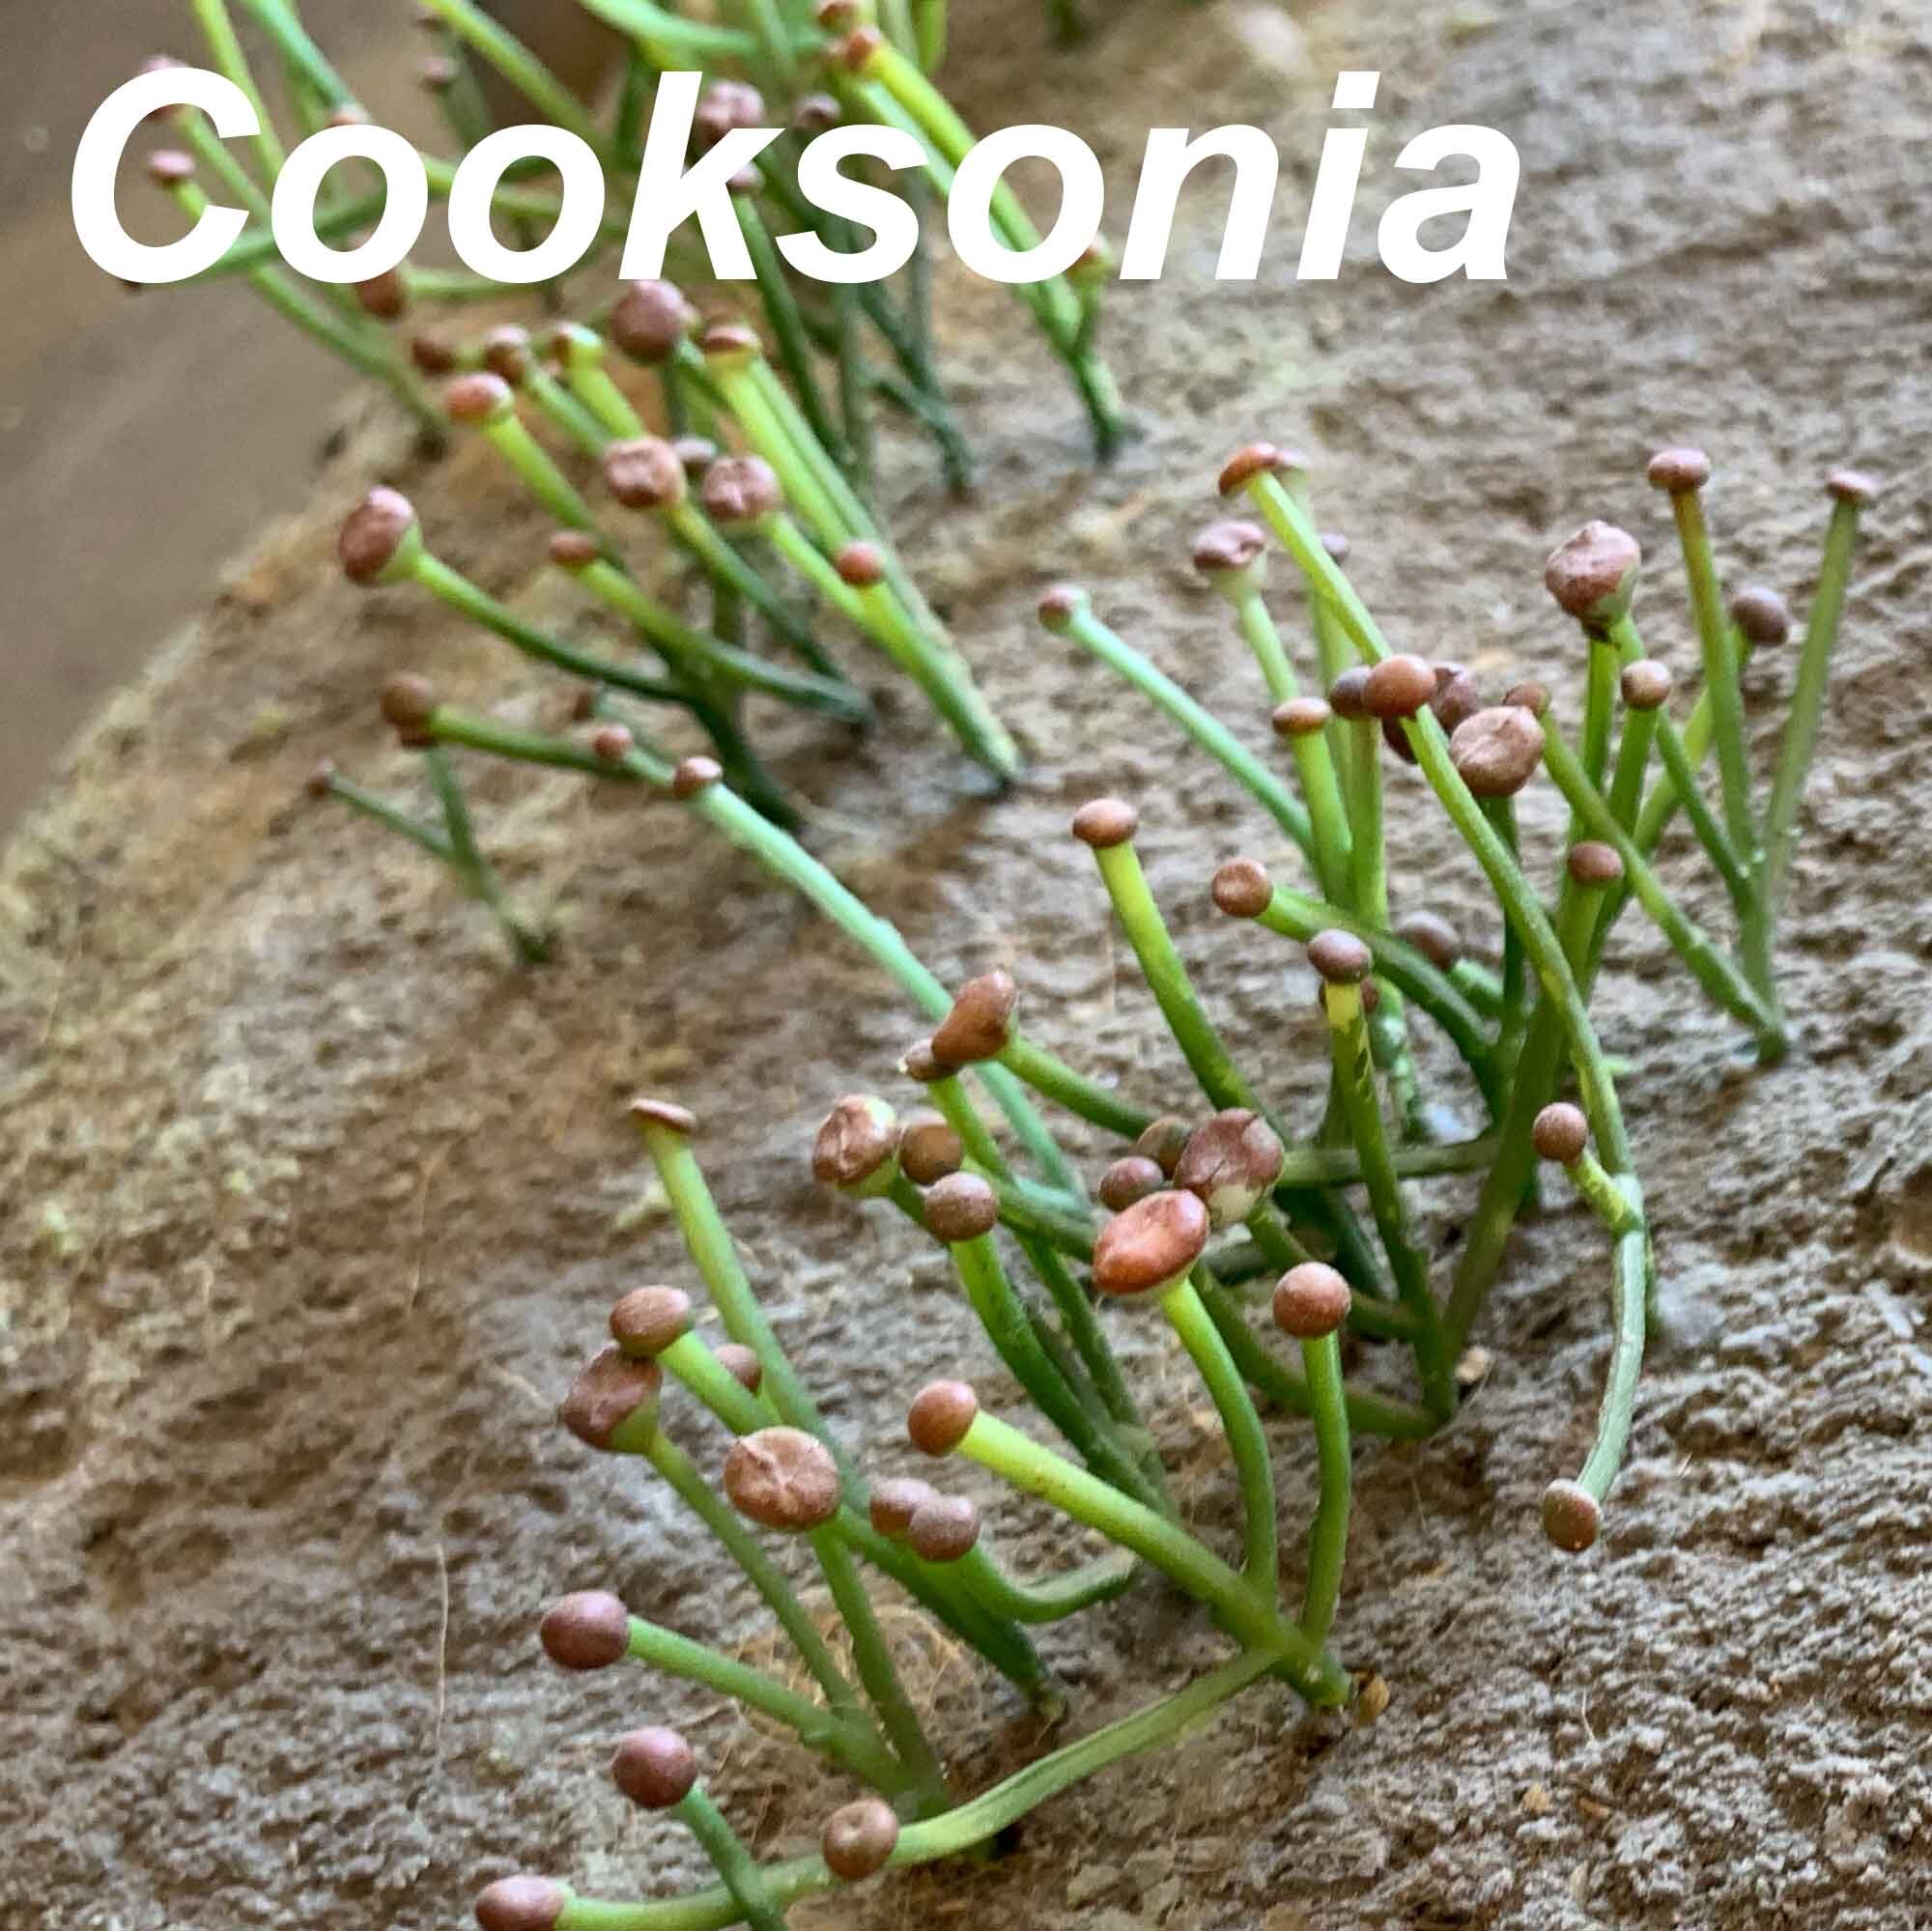 Cooksonia-2000px.jpg